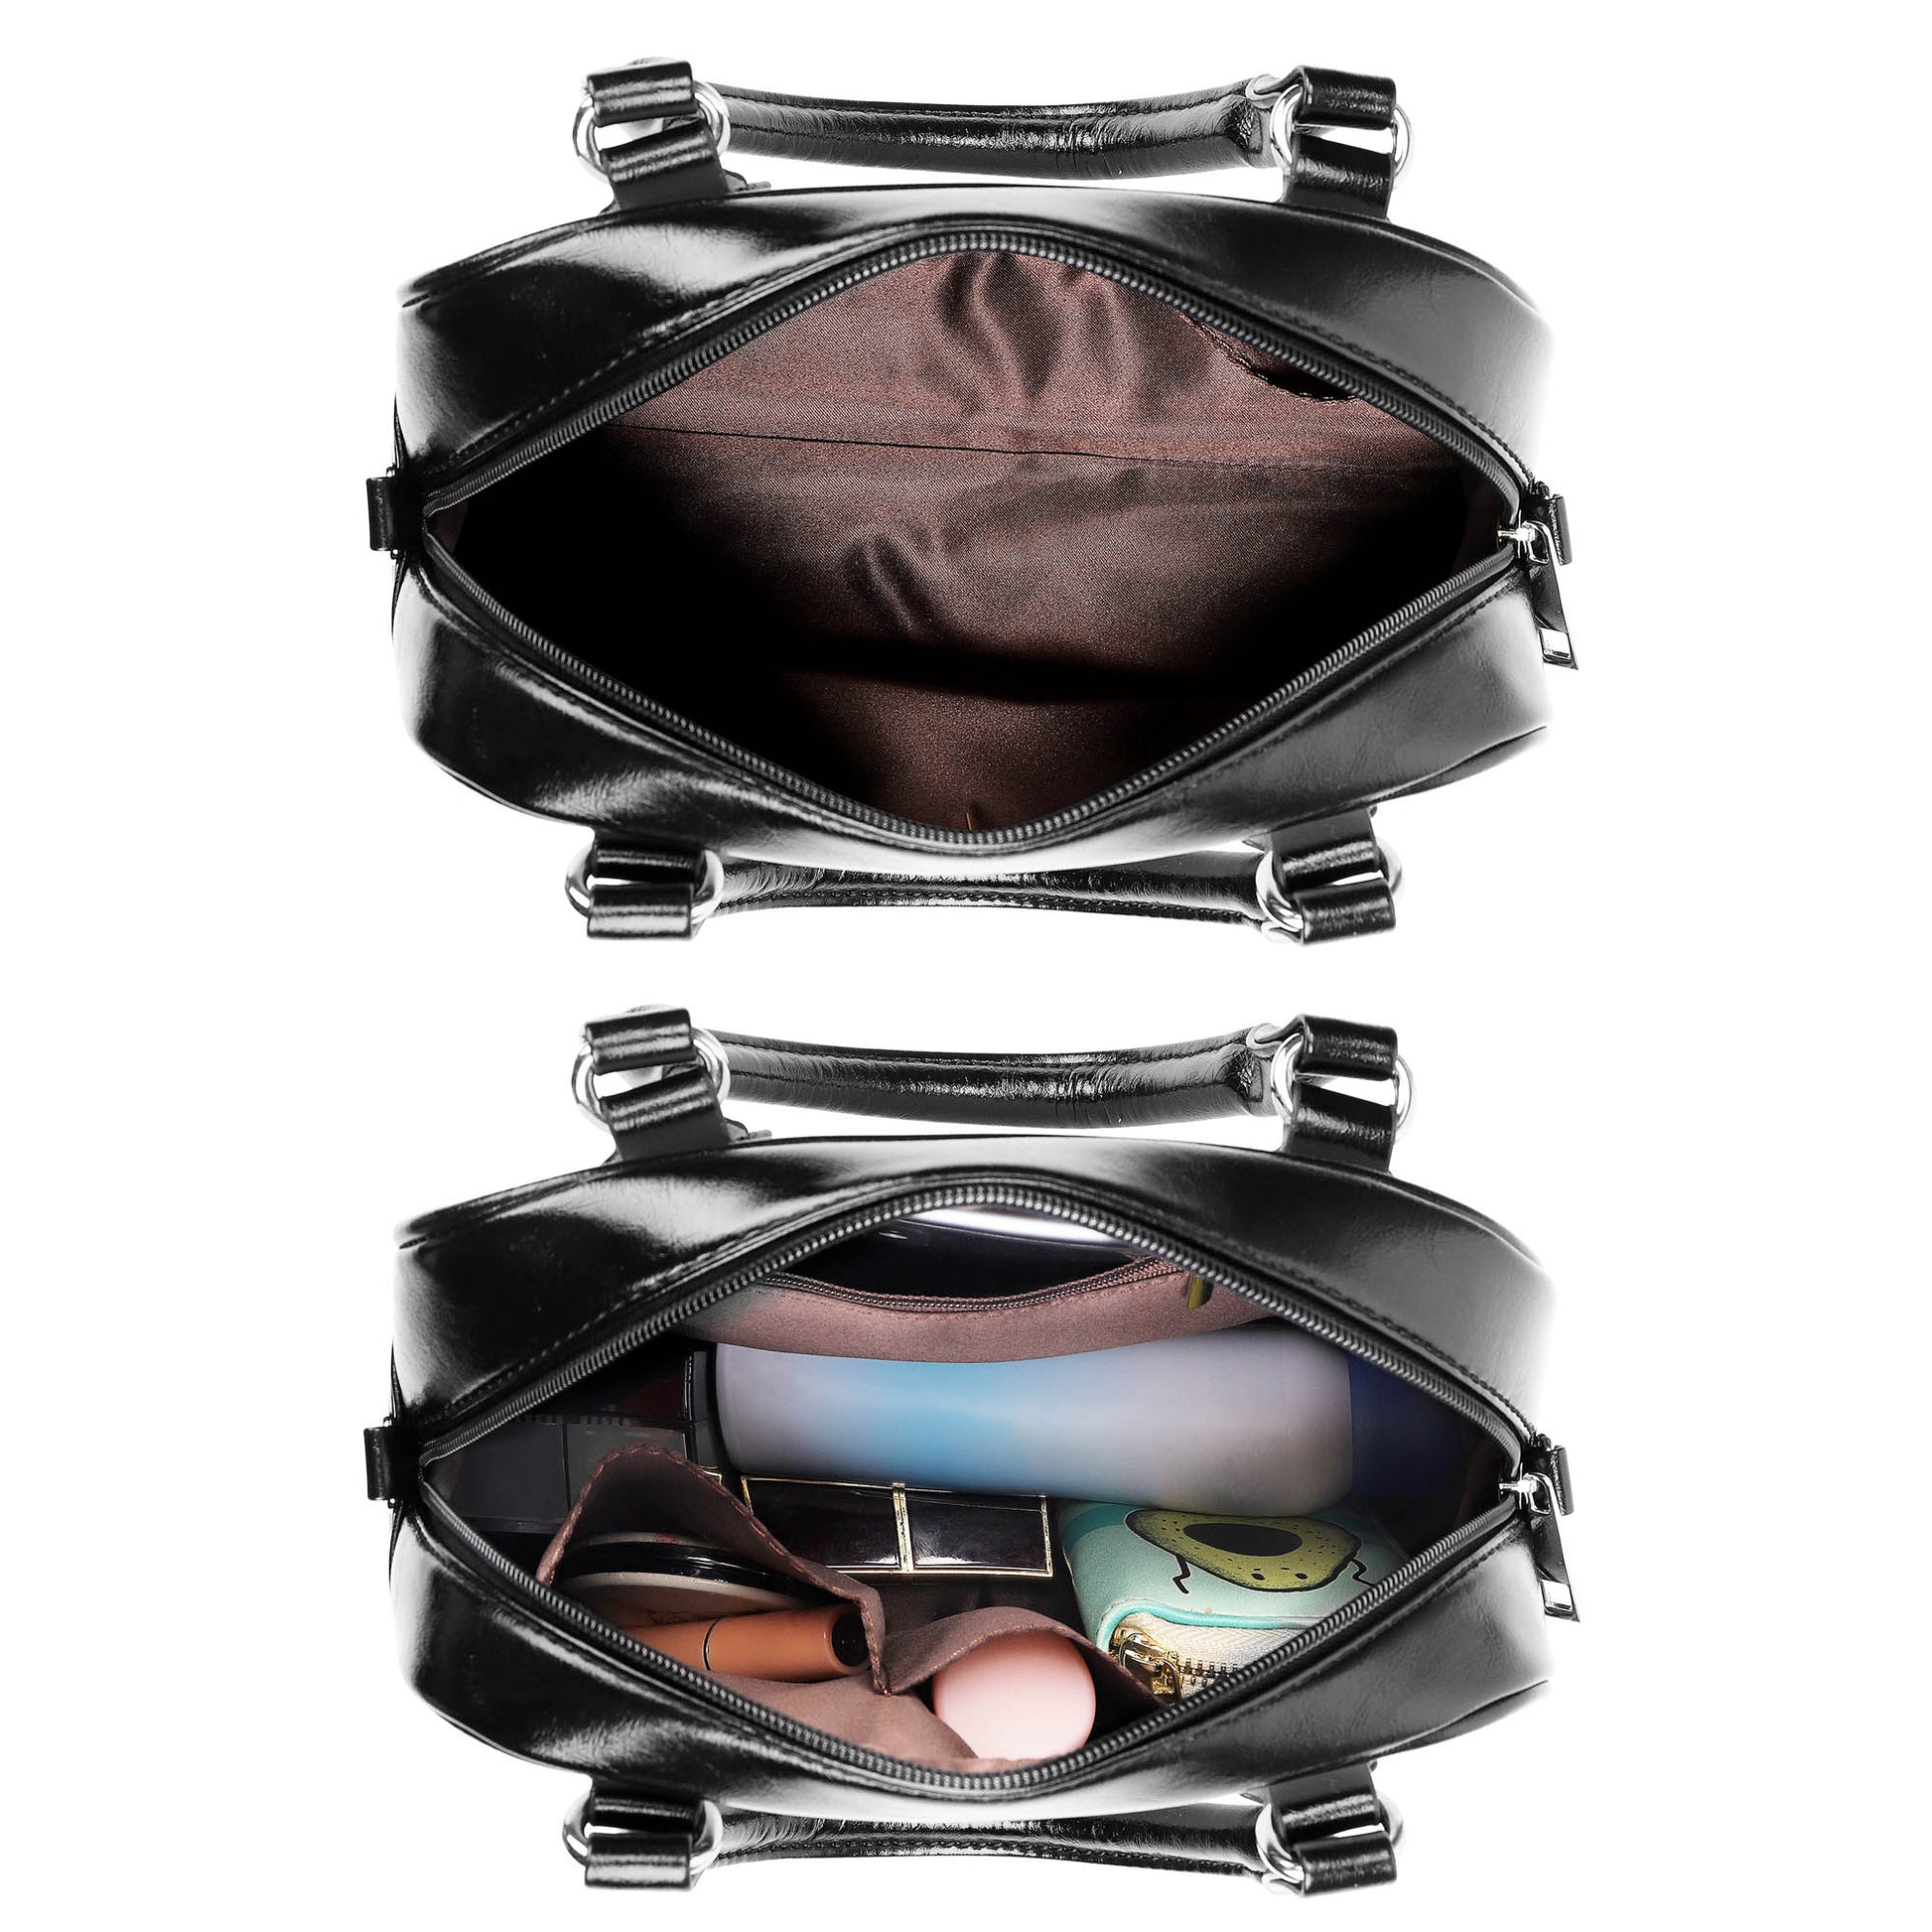 Lennox Tartan Shoulder Handbags with Family Crest - Tartanvibesclothing